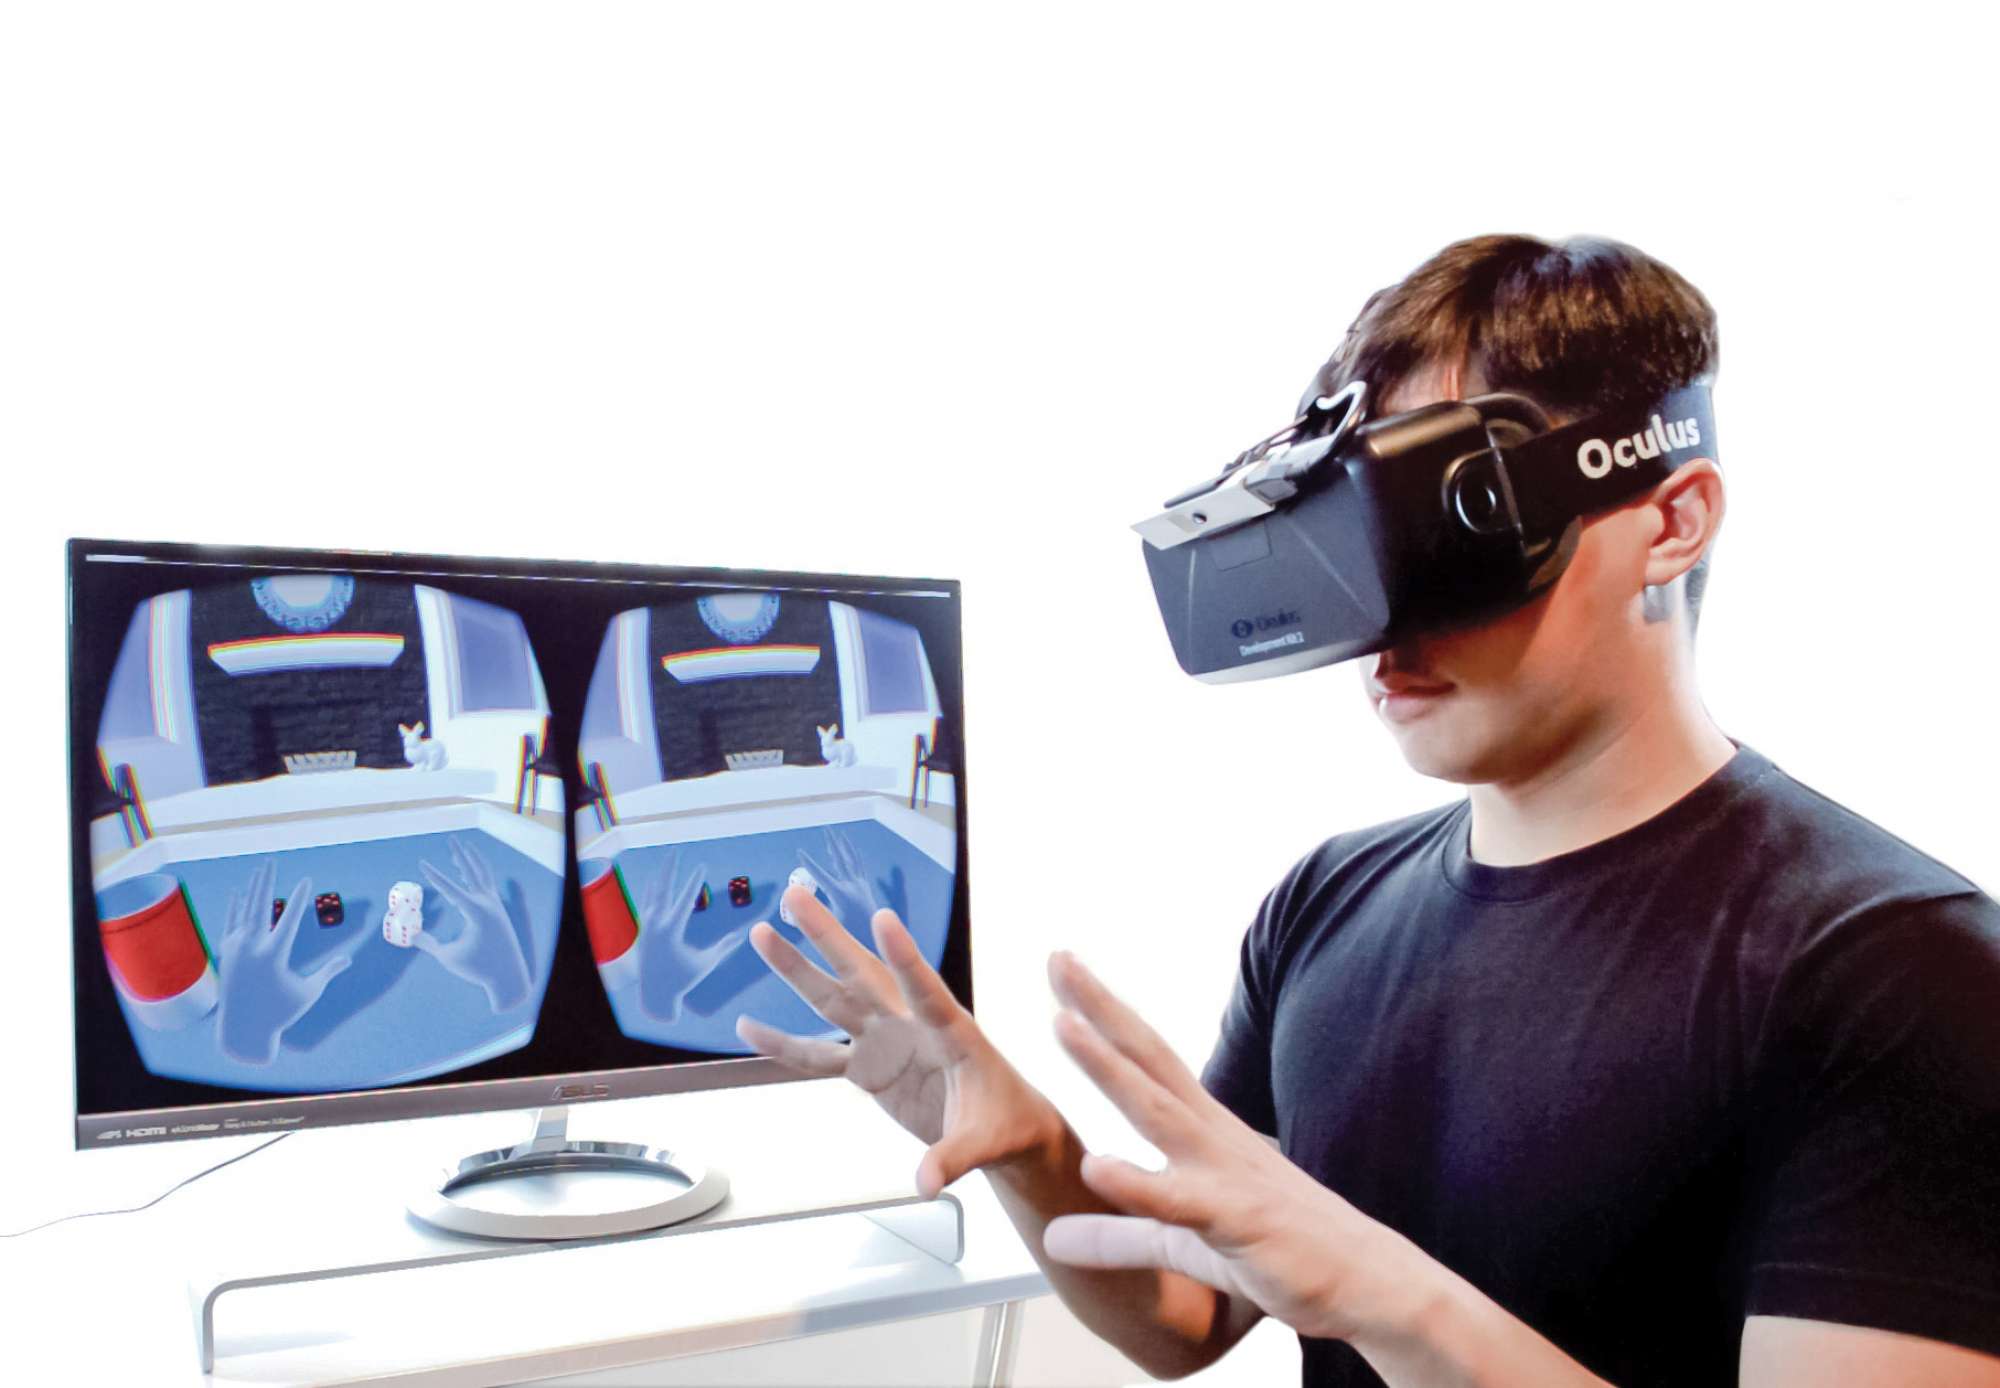 Vr type. ВР очки Oculus Rift. VR очки Oculus 3. PLAYSTATION vr2. Очки Окулус 2.